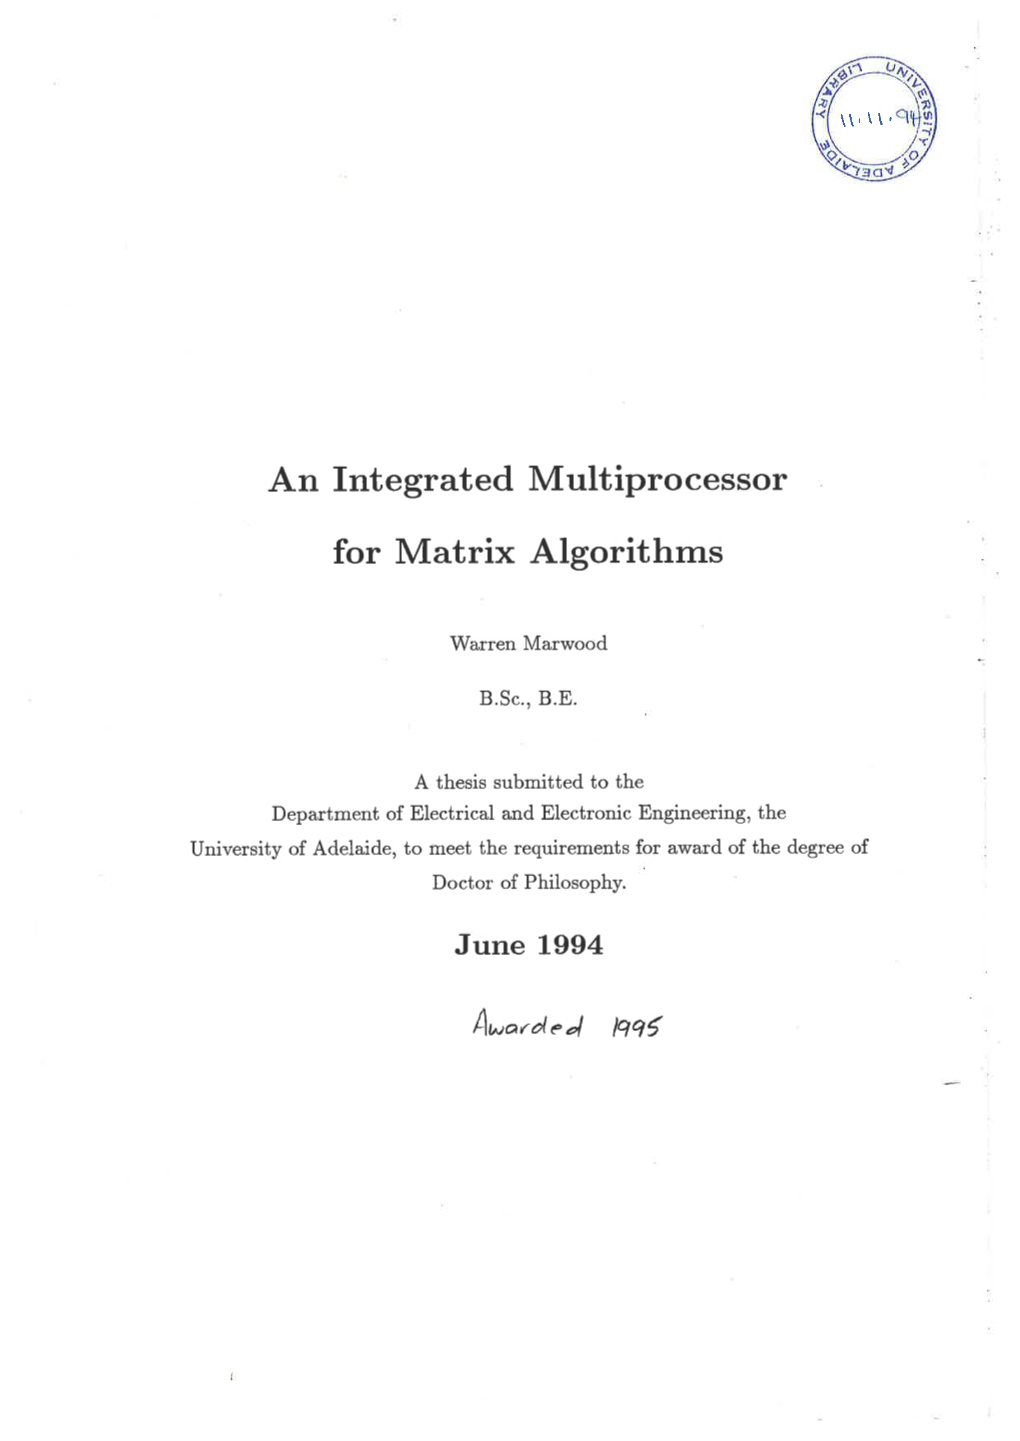 An Integrated Multiprocessor for Matrix Algorithms